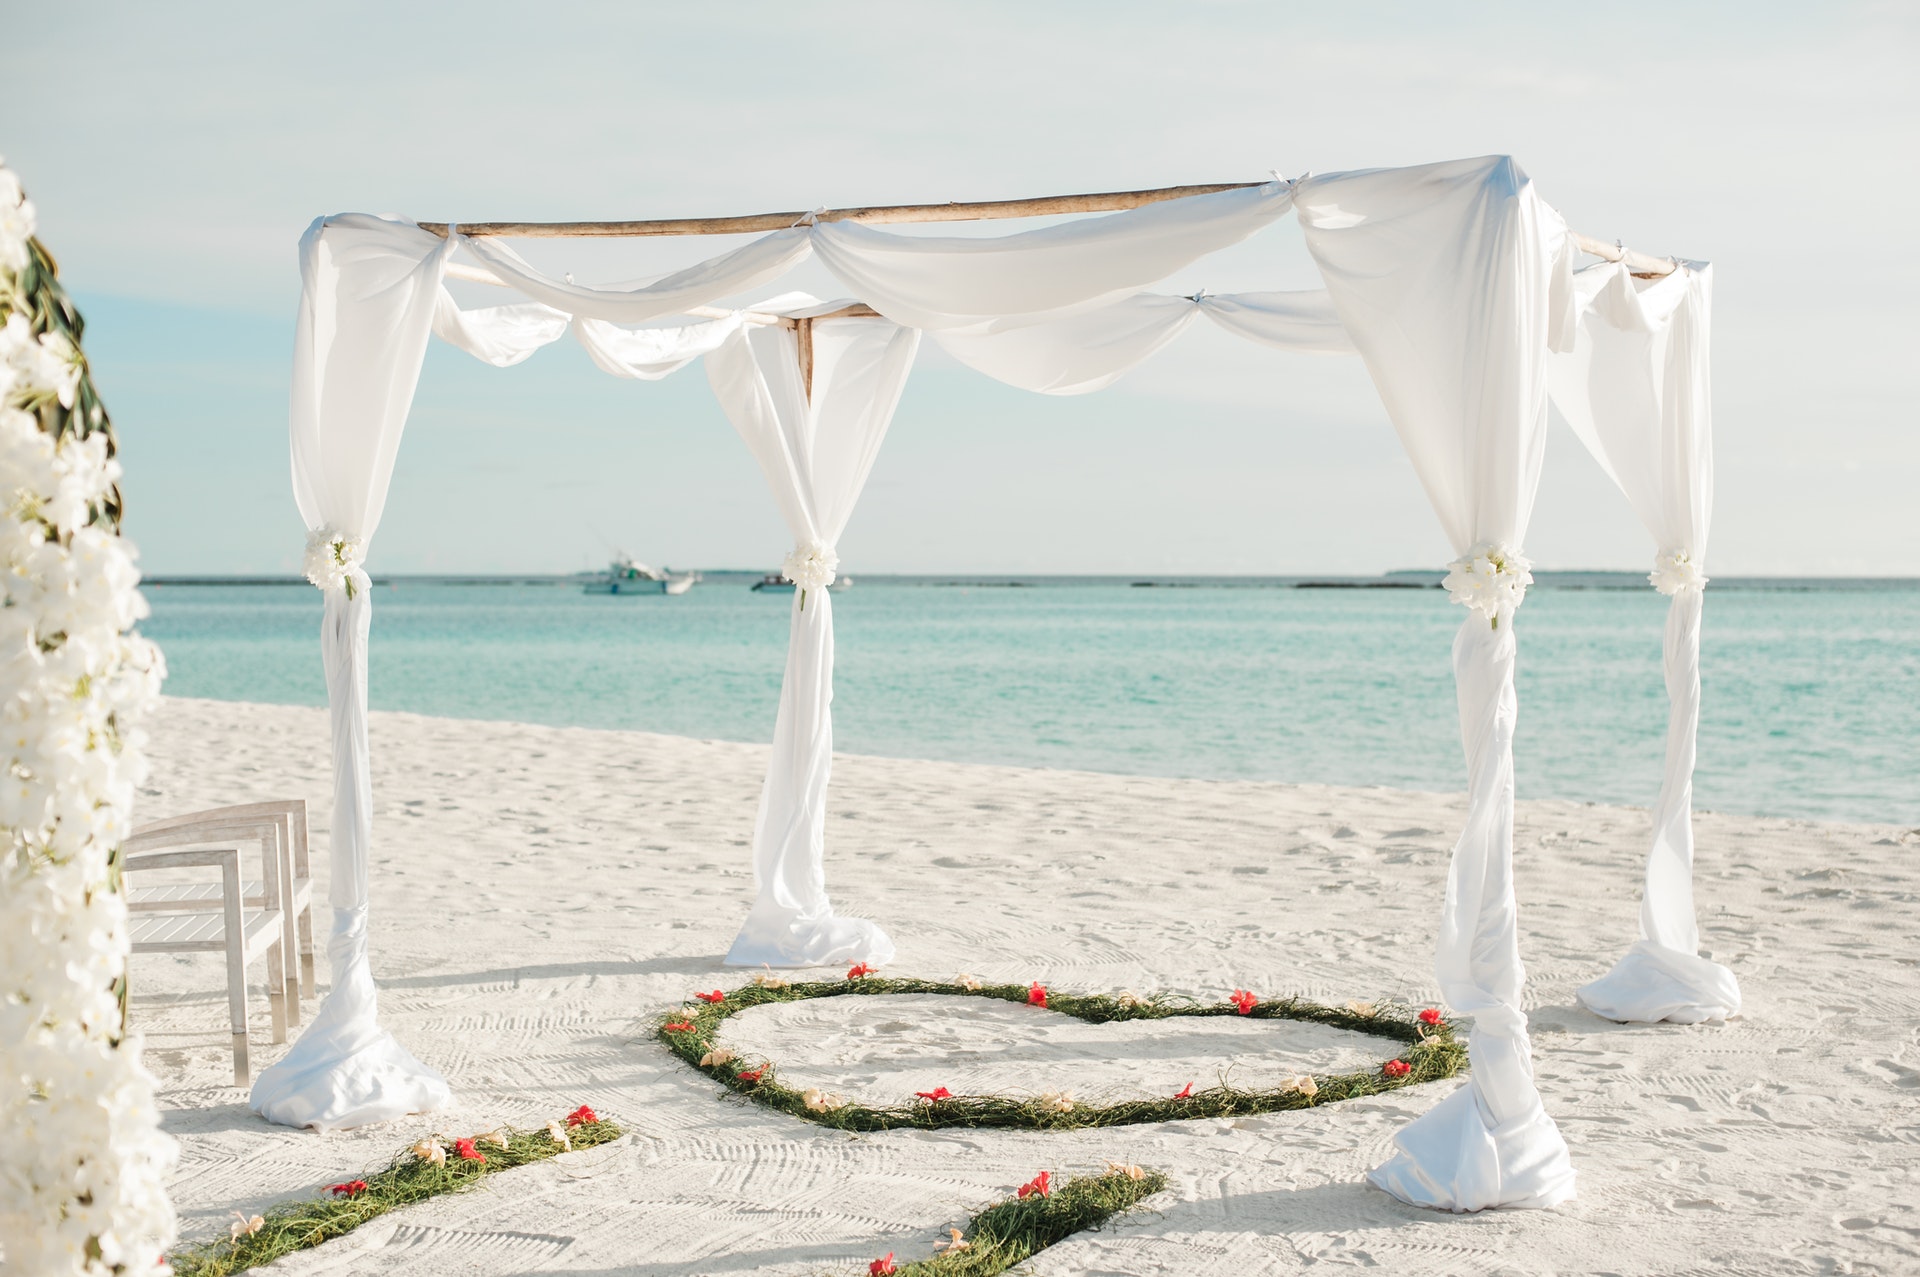 beach wedding attire for men